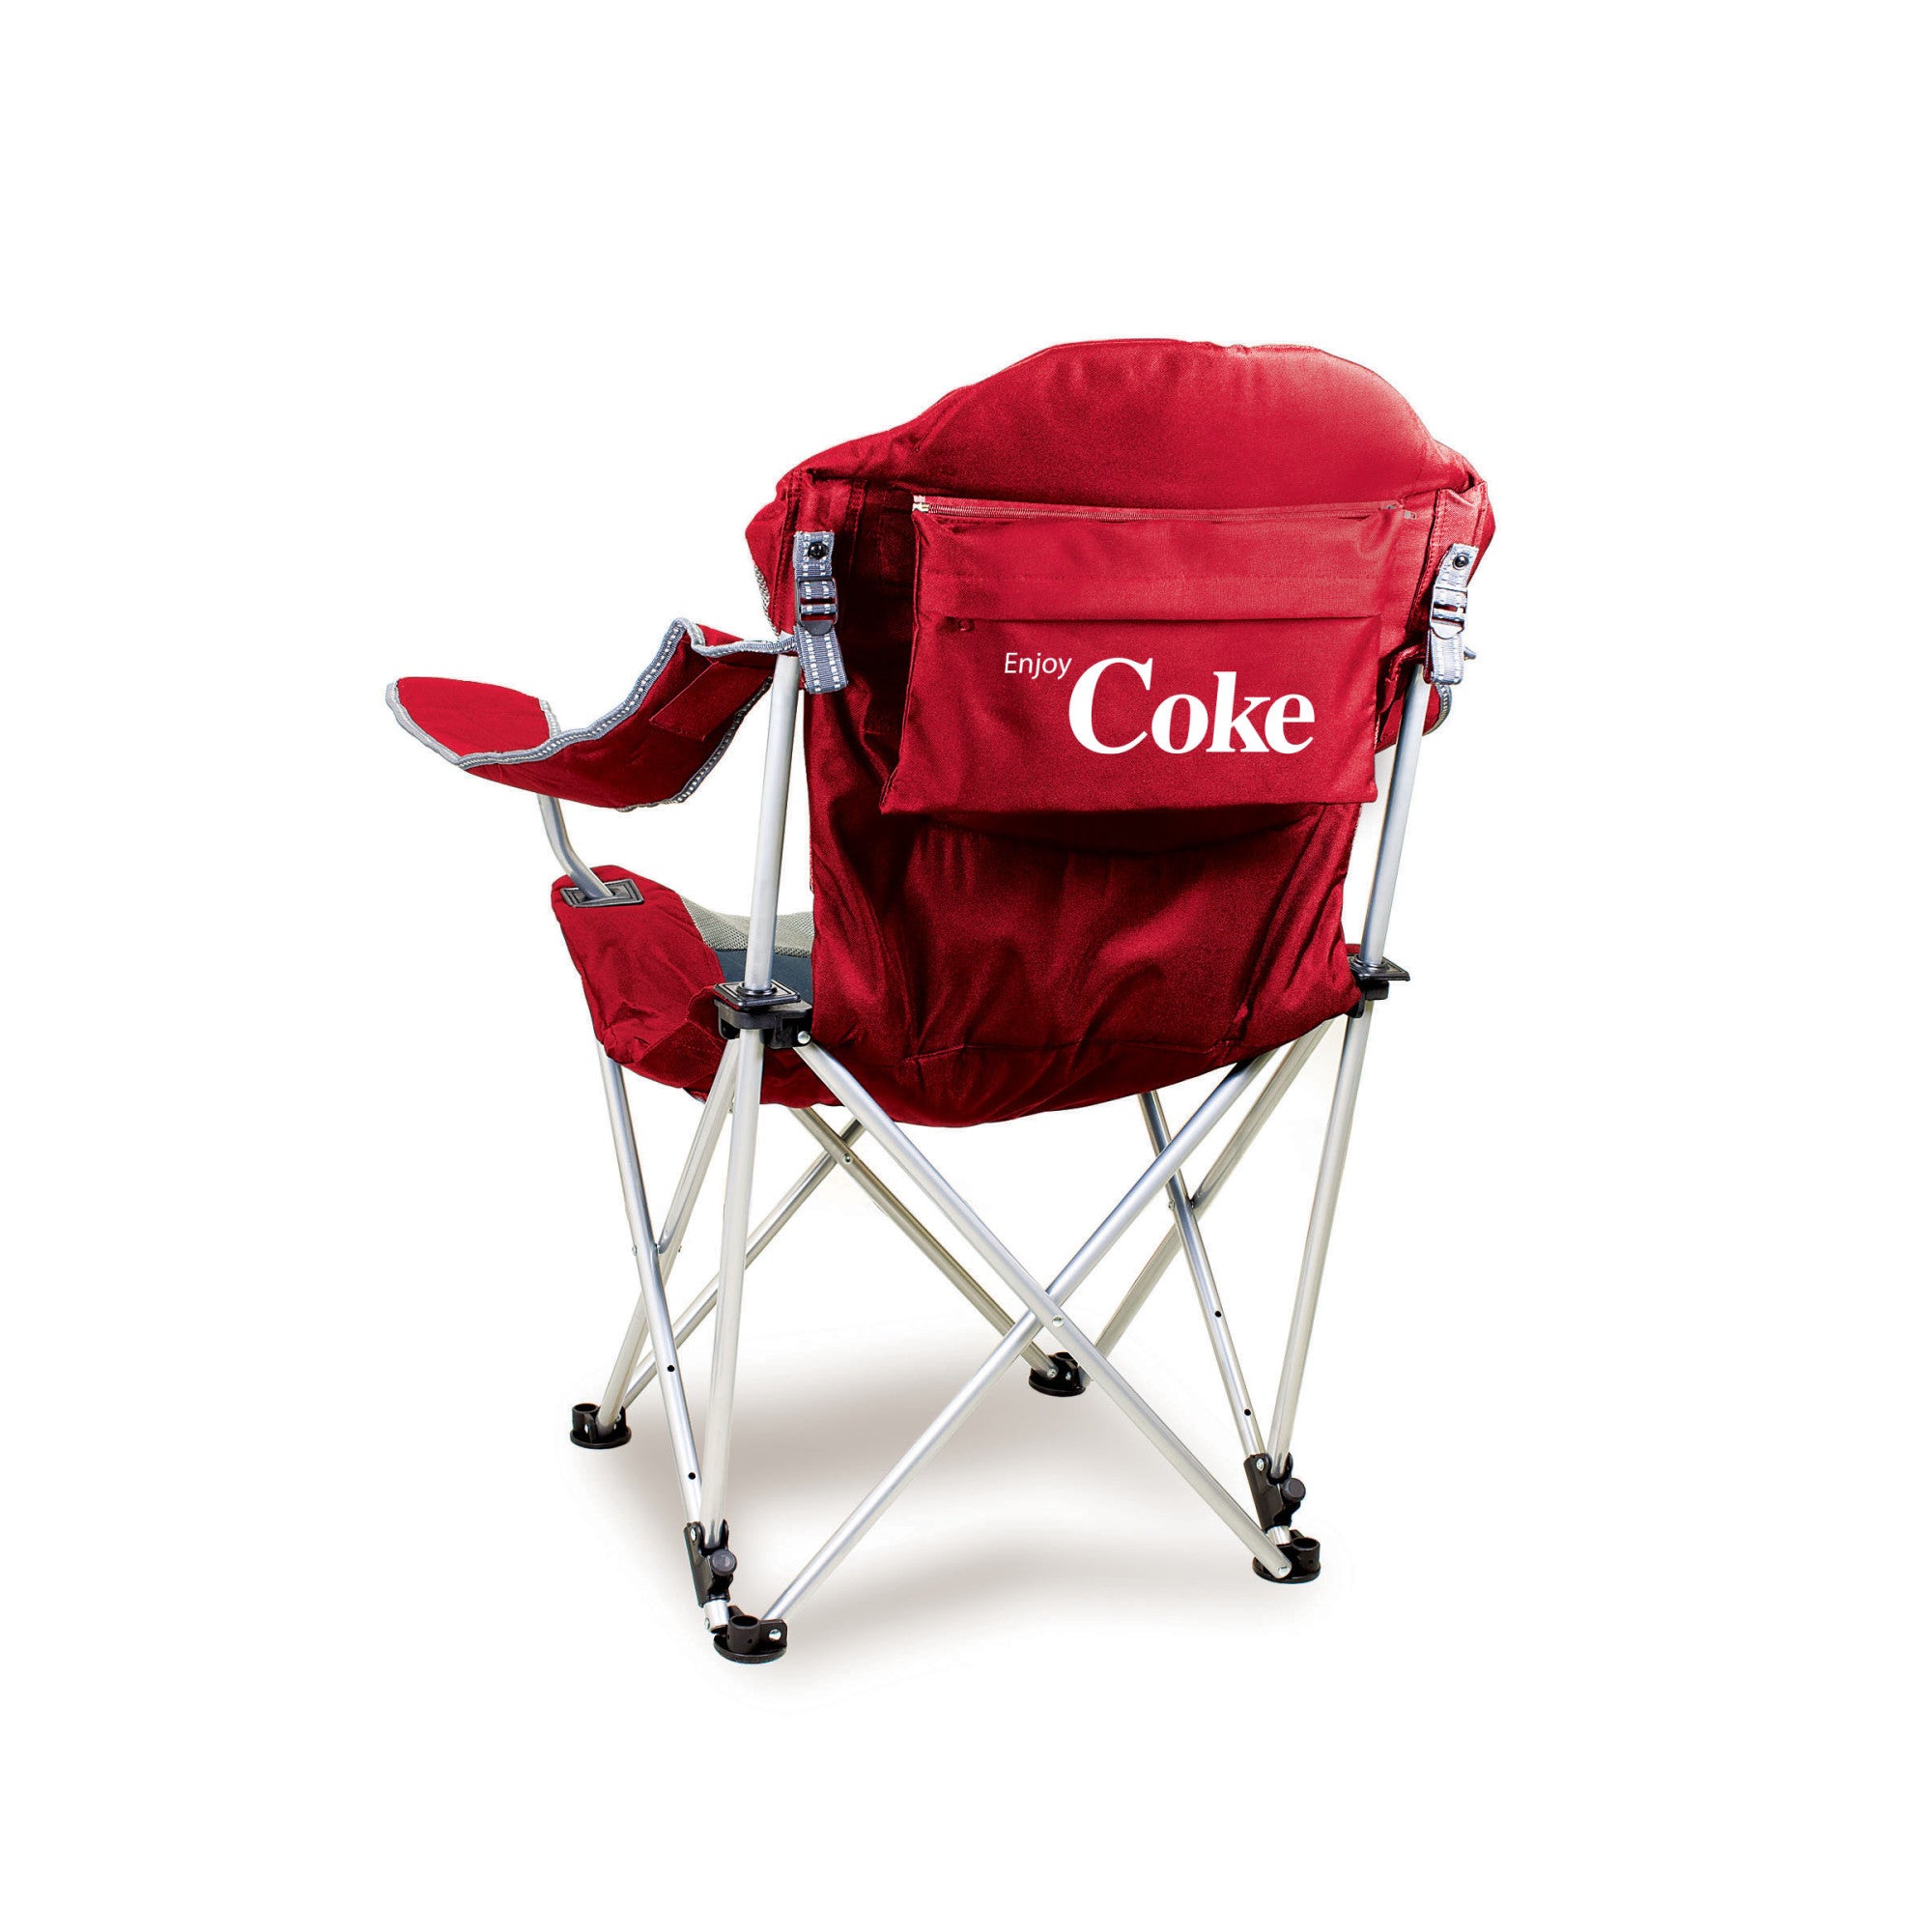 Enjoy Coke - Coca-Cola - Reclining Camp Chair